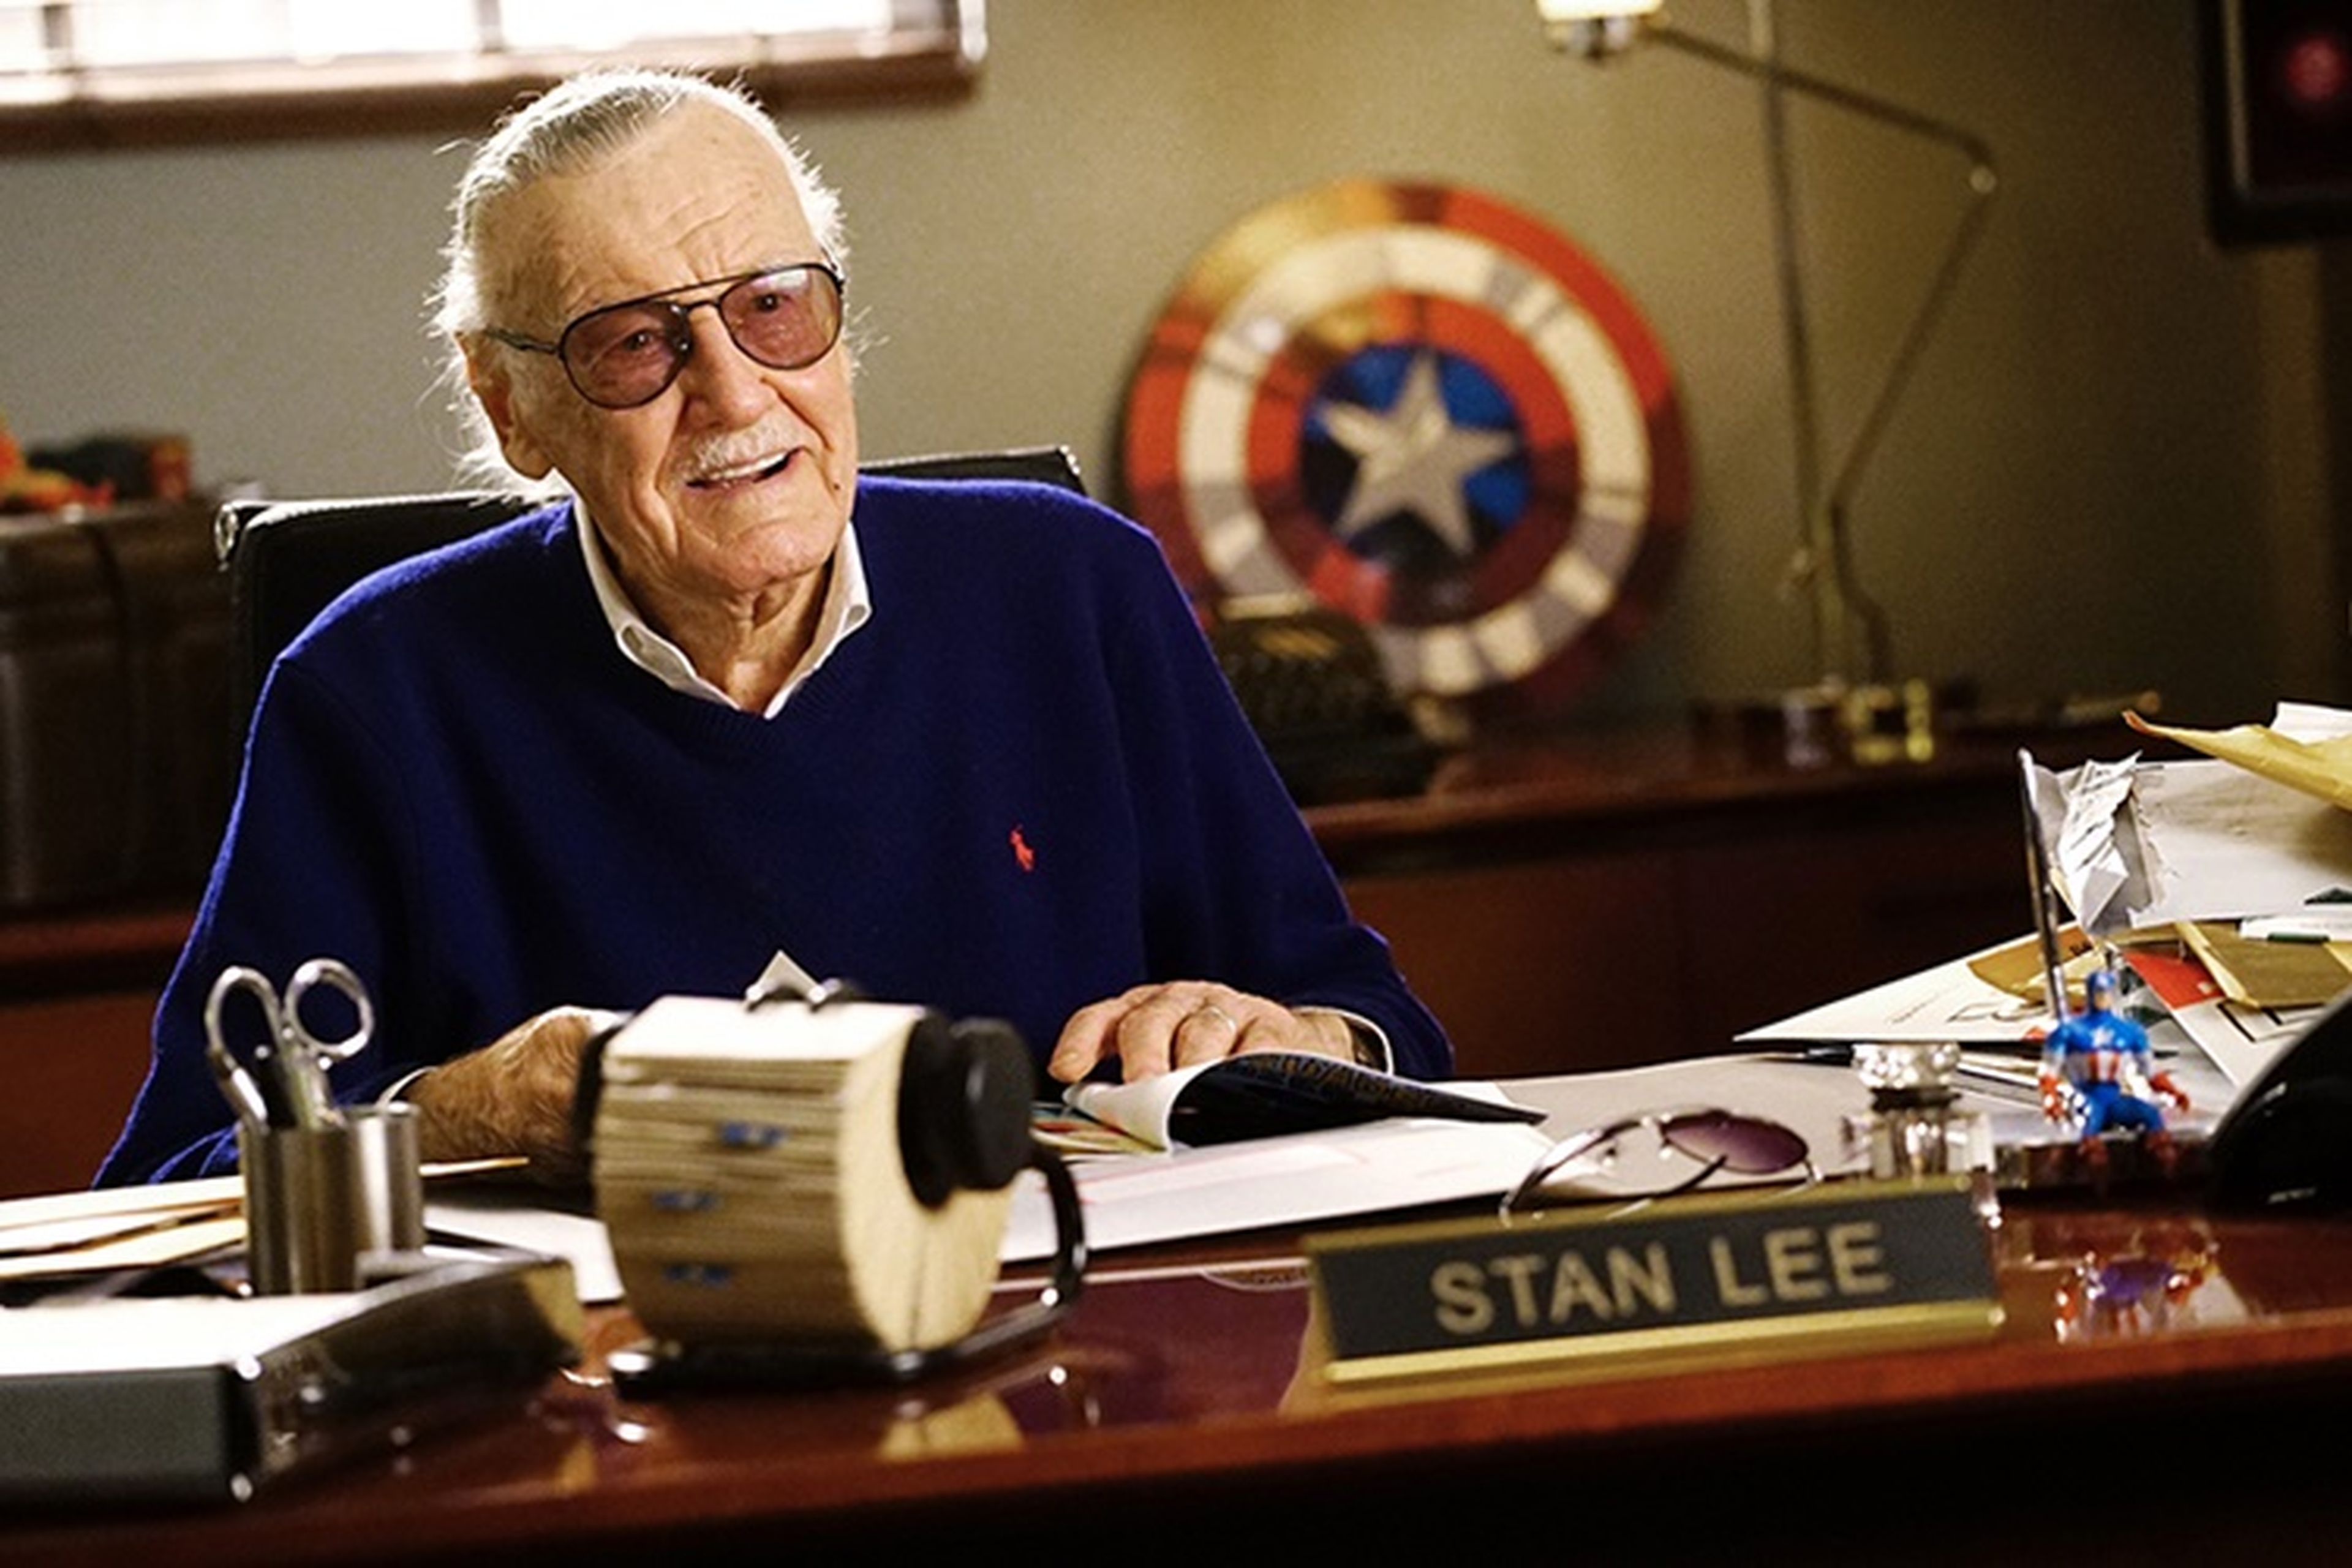 Stan "The Man" Lee